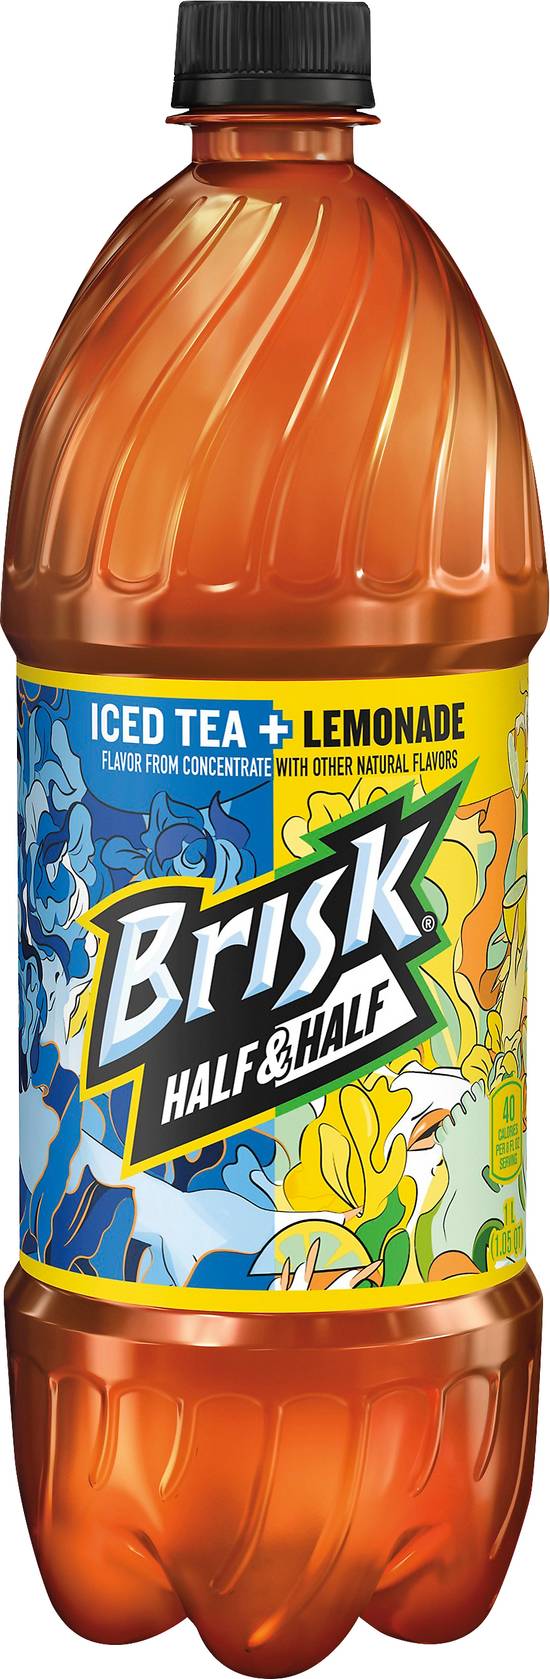 Brisk Lemonade Half & Half Iced Tea (1 L)